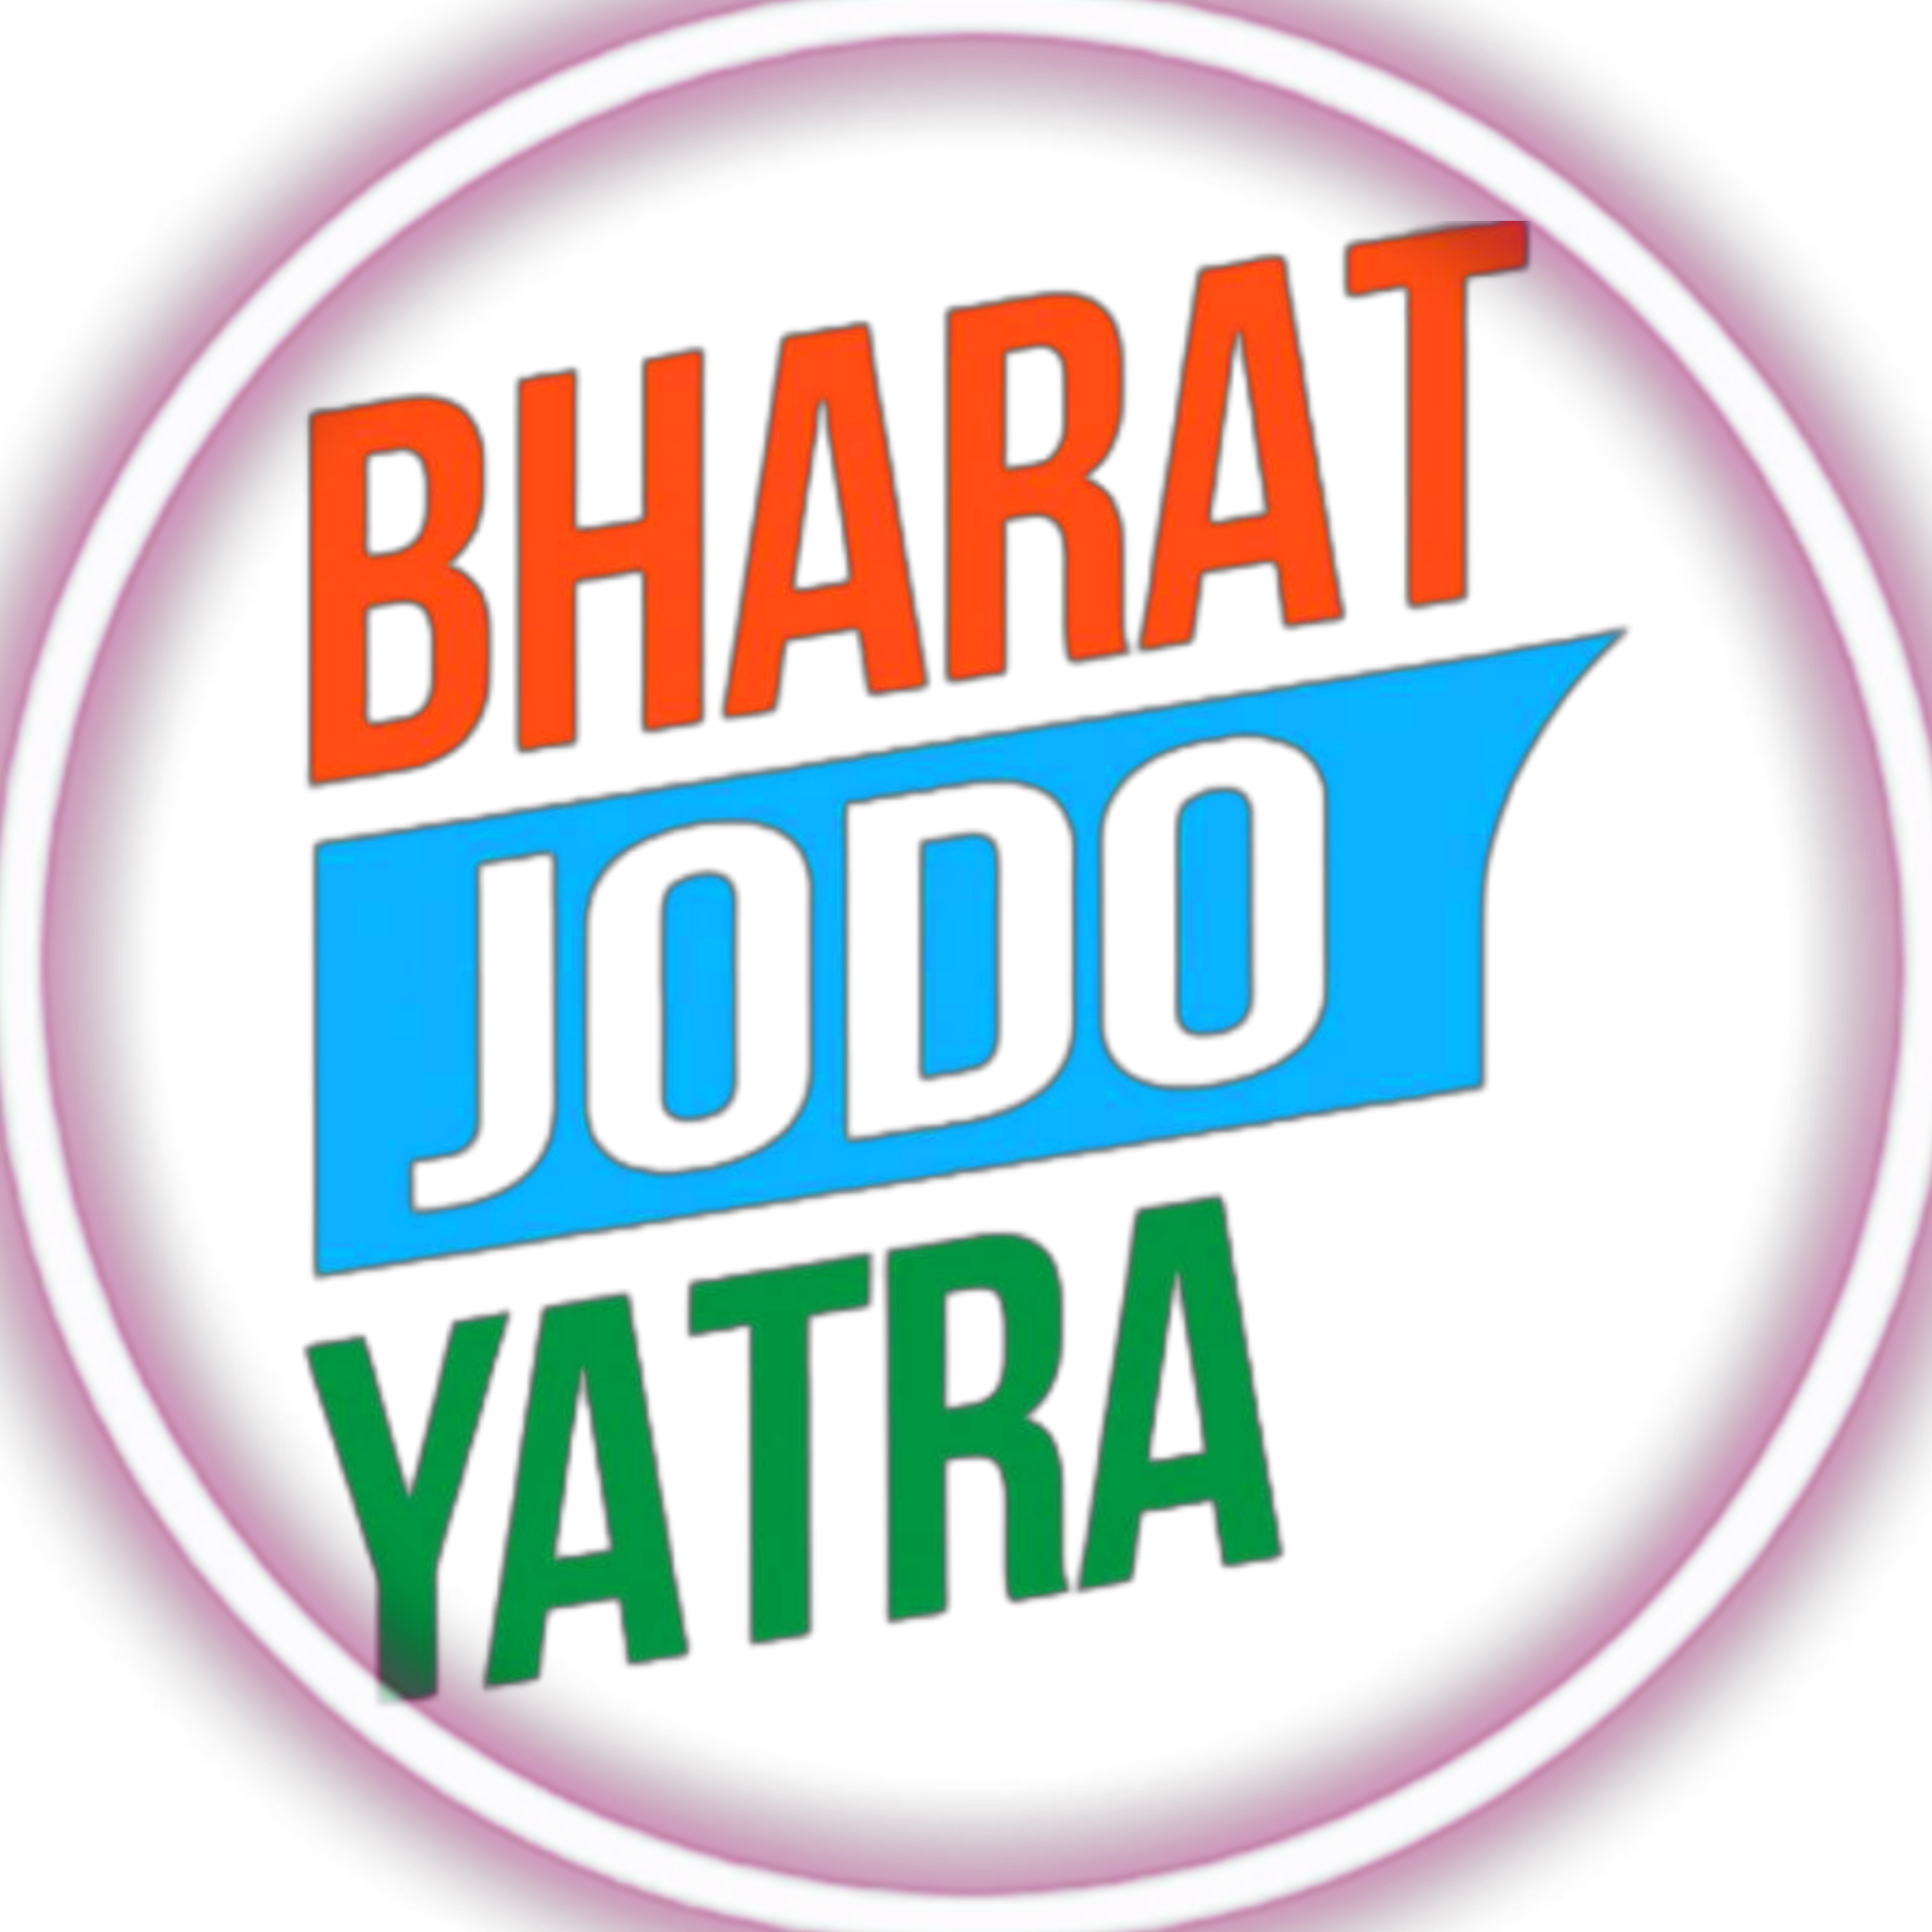 भारत जोड़ो यात्रा | Bharat jodo Yatra image DP wallpaper